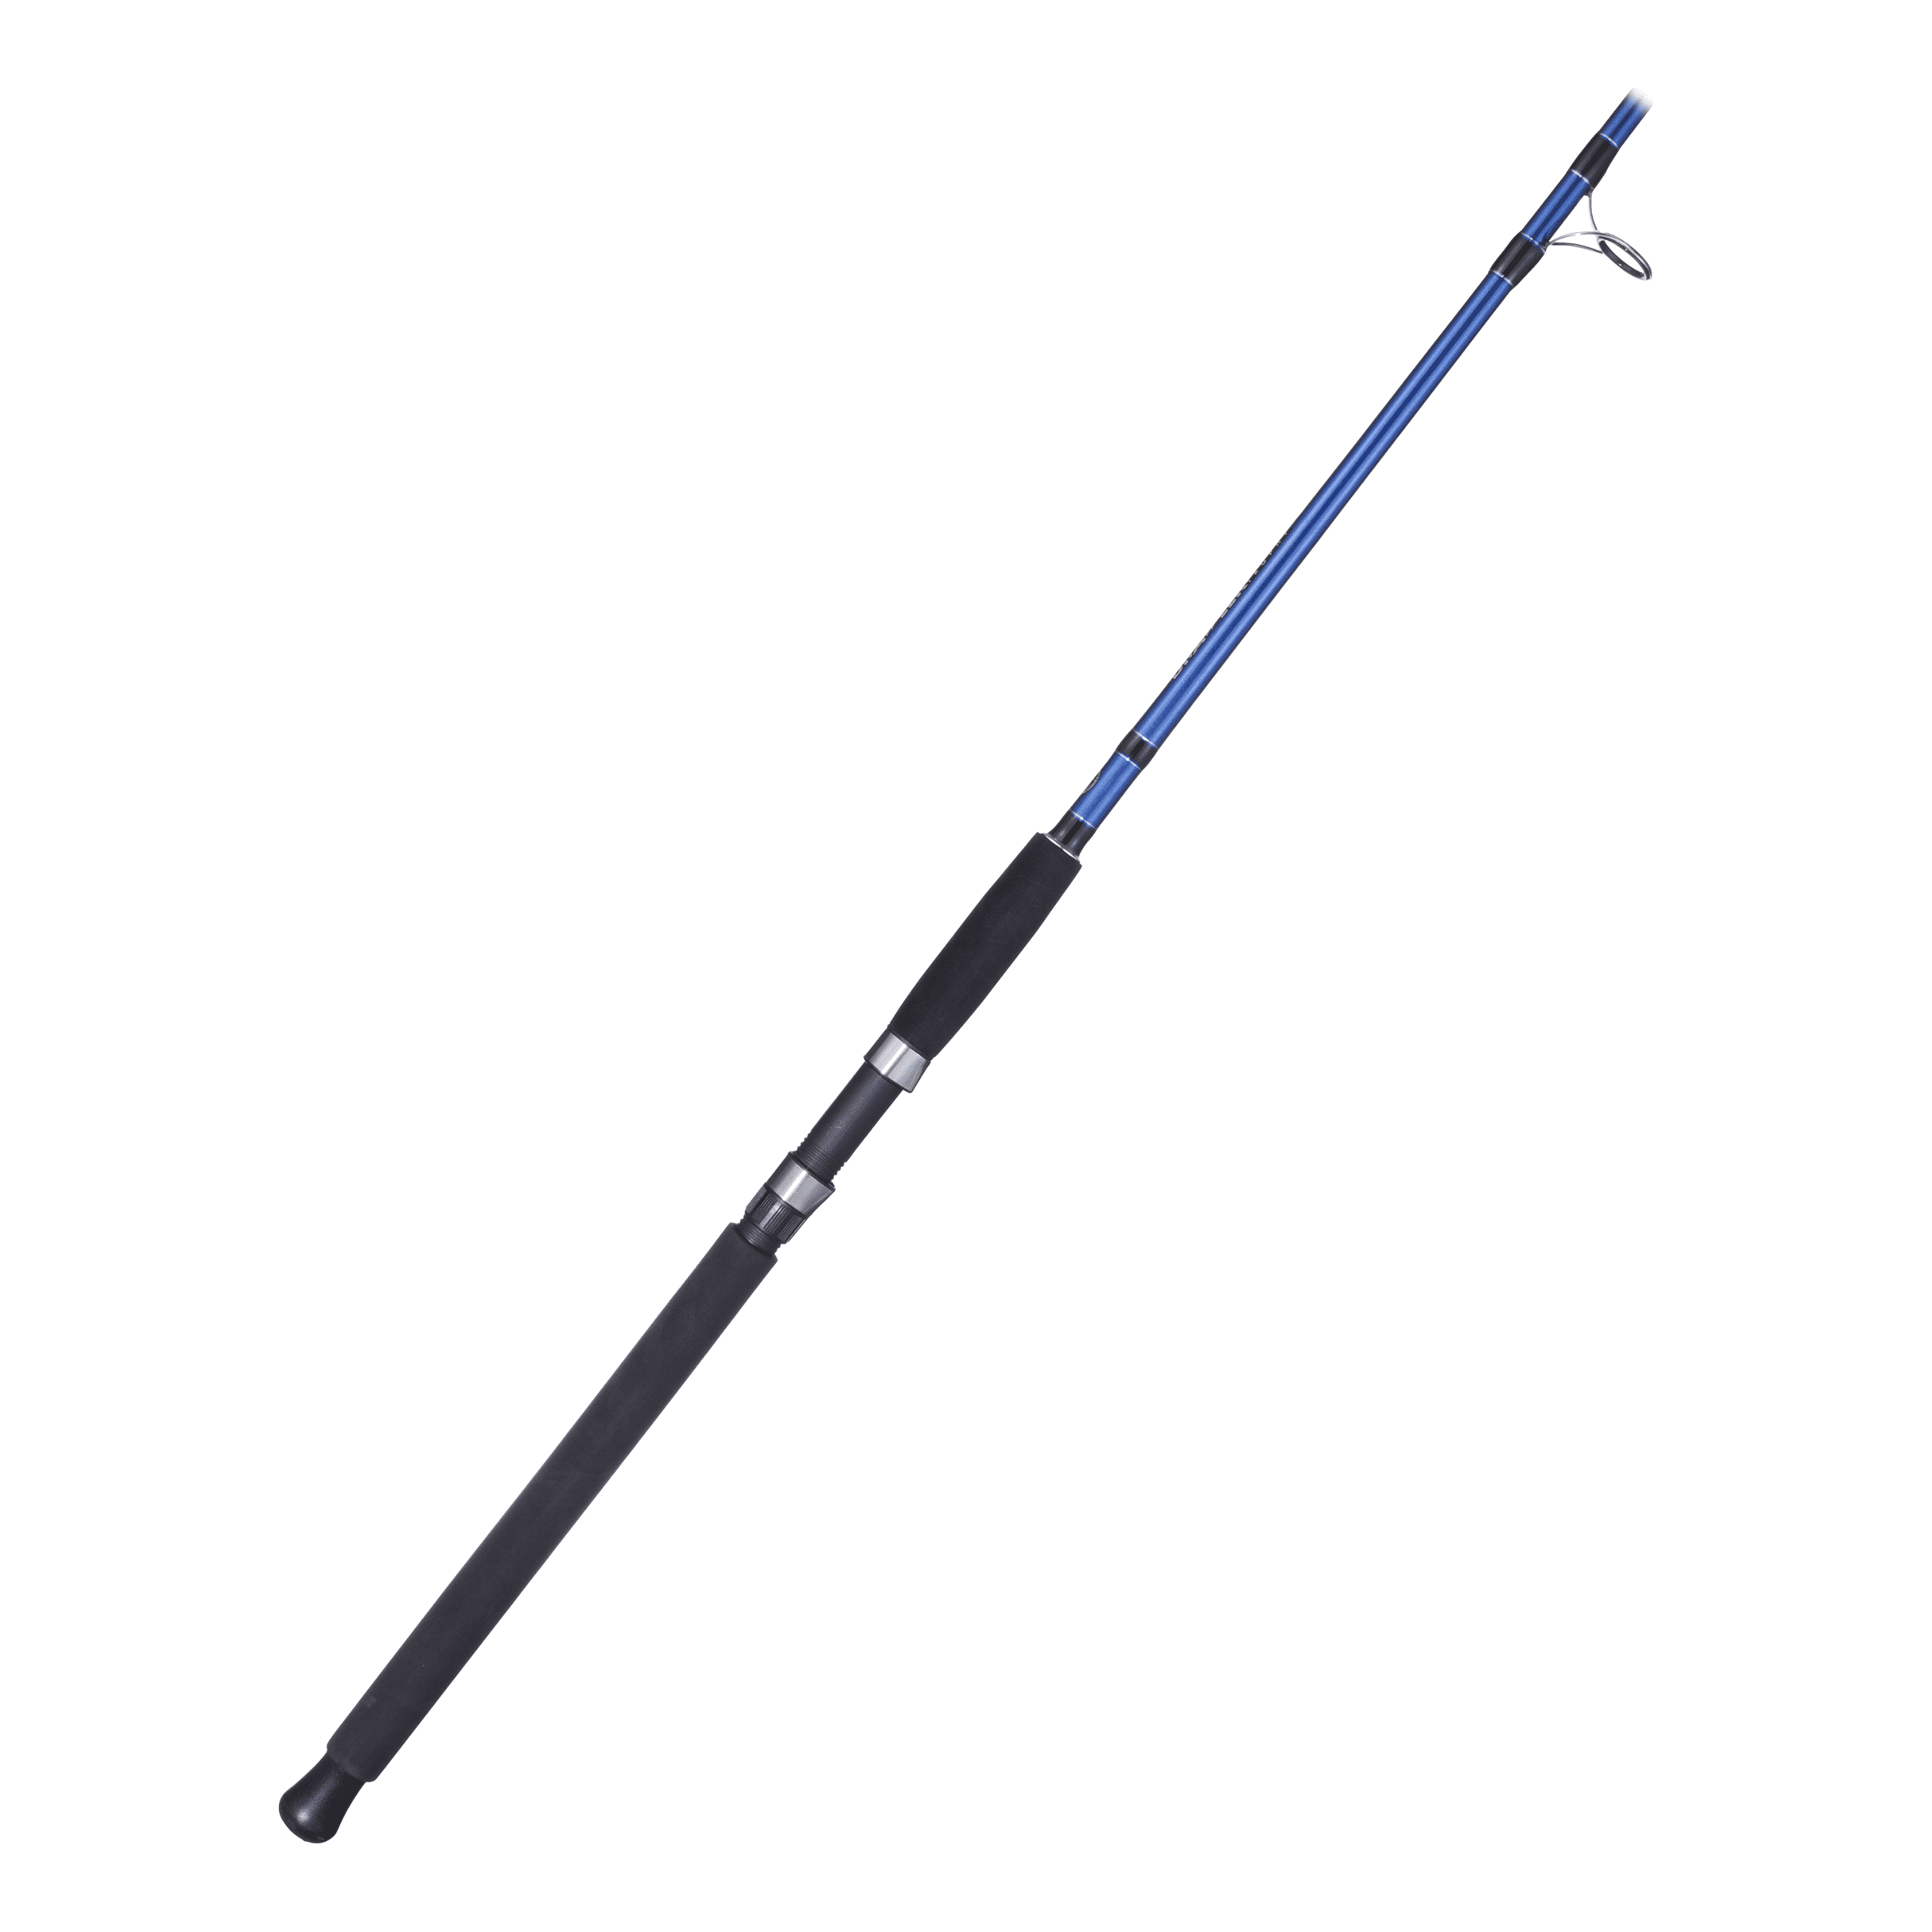 ZZTWER Carbon Super Hard Fishing Rod Spinning Rod, Big Game Roller